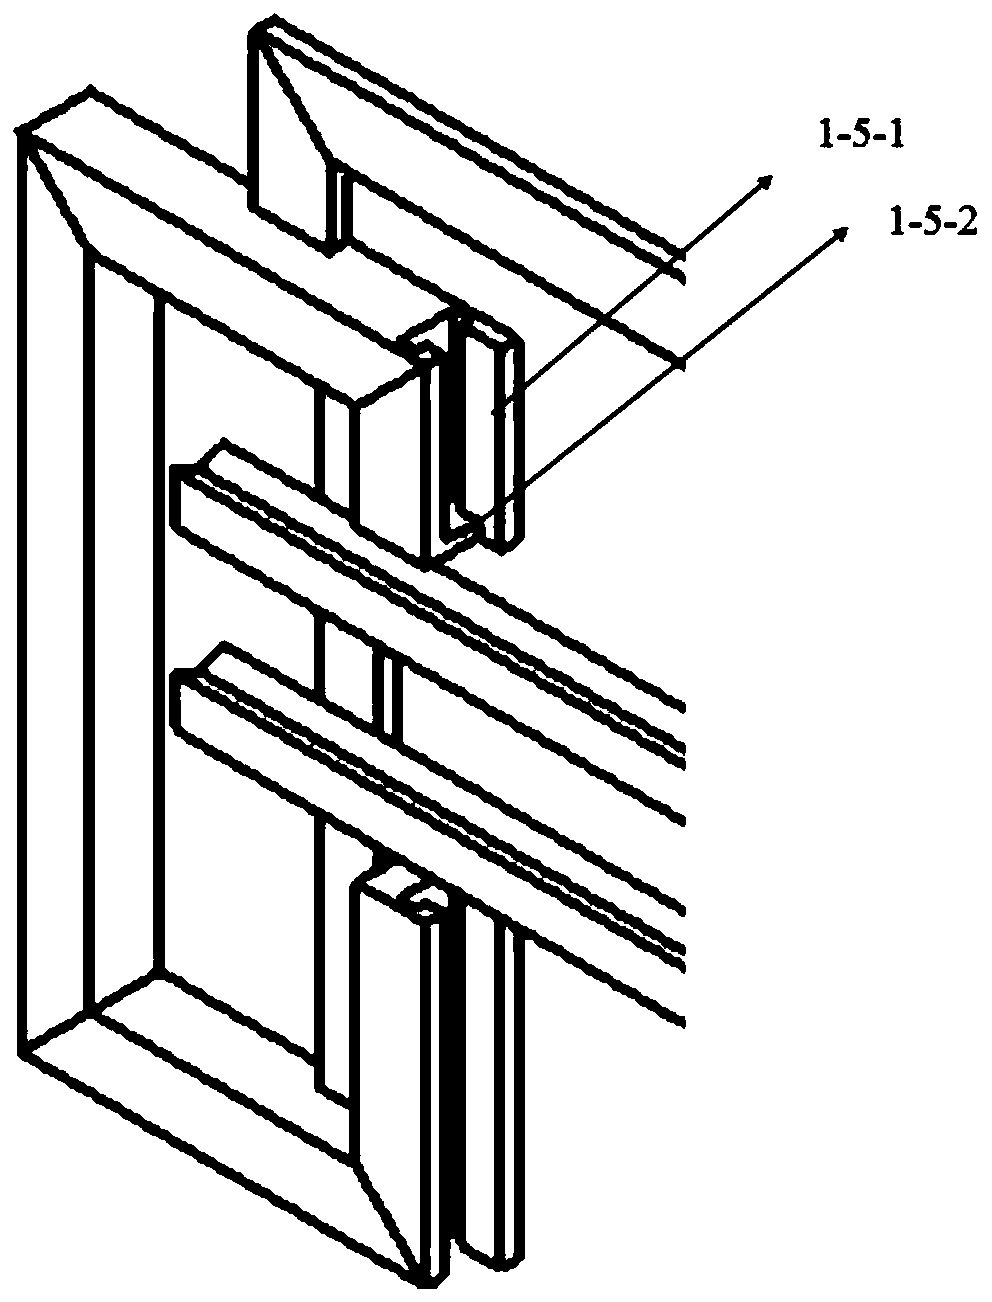 A Large Adjustable Frame Structure Welding Fixture